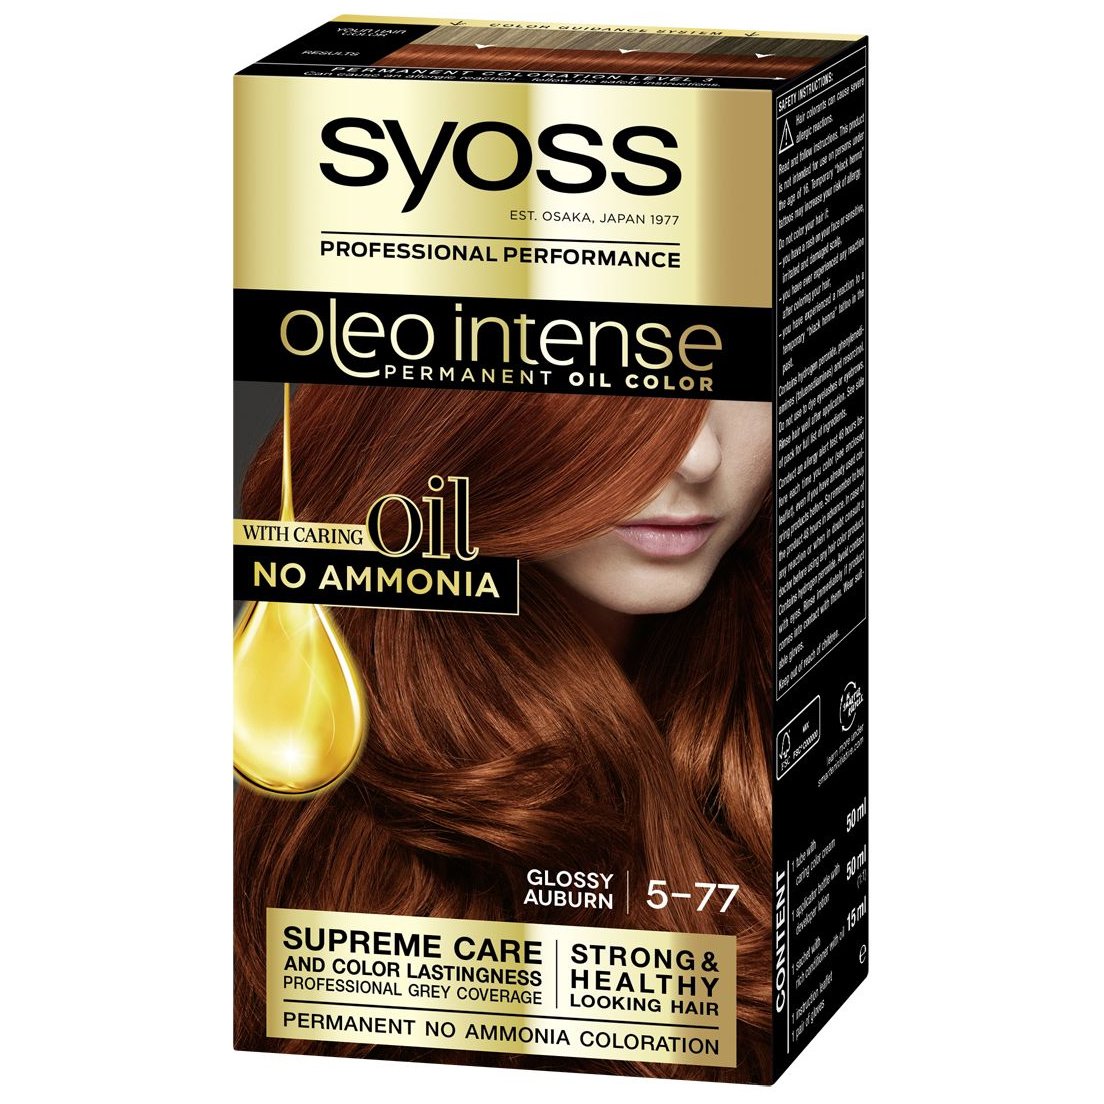 Syoss Oleo Intense Permanent Oil Hair Color Kit Επαγγελματική Μόνιμη Βαφή Μαλλιών για Εξαιρετική Κάλυψη & Έντονο Χρώμα που Διαρκεί, Χωρίς Αμμωνία 1 Τεμάχιο – 5-77 Καστανό Ανοιχτό Έντονο Χάλκινο